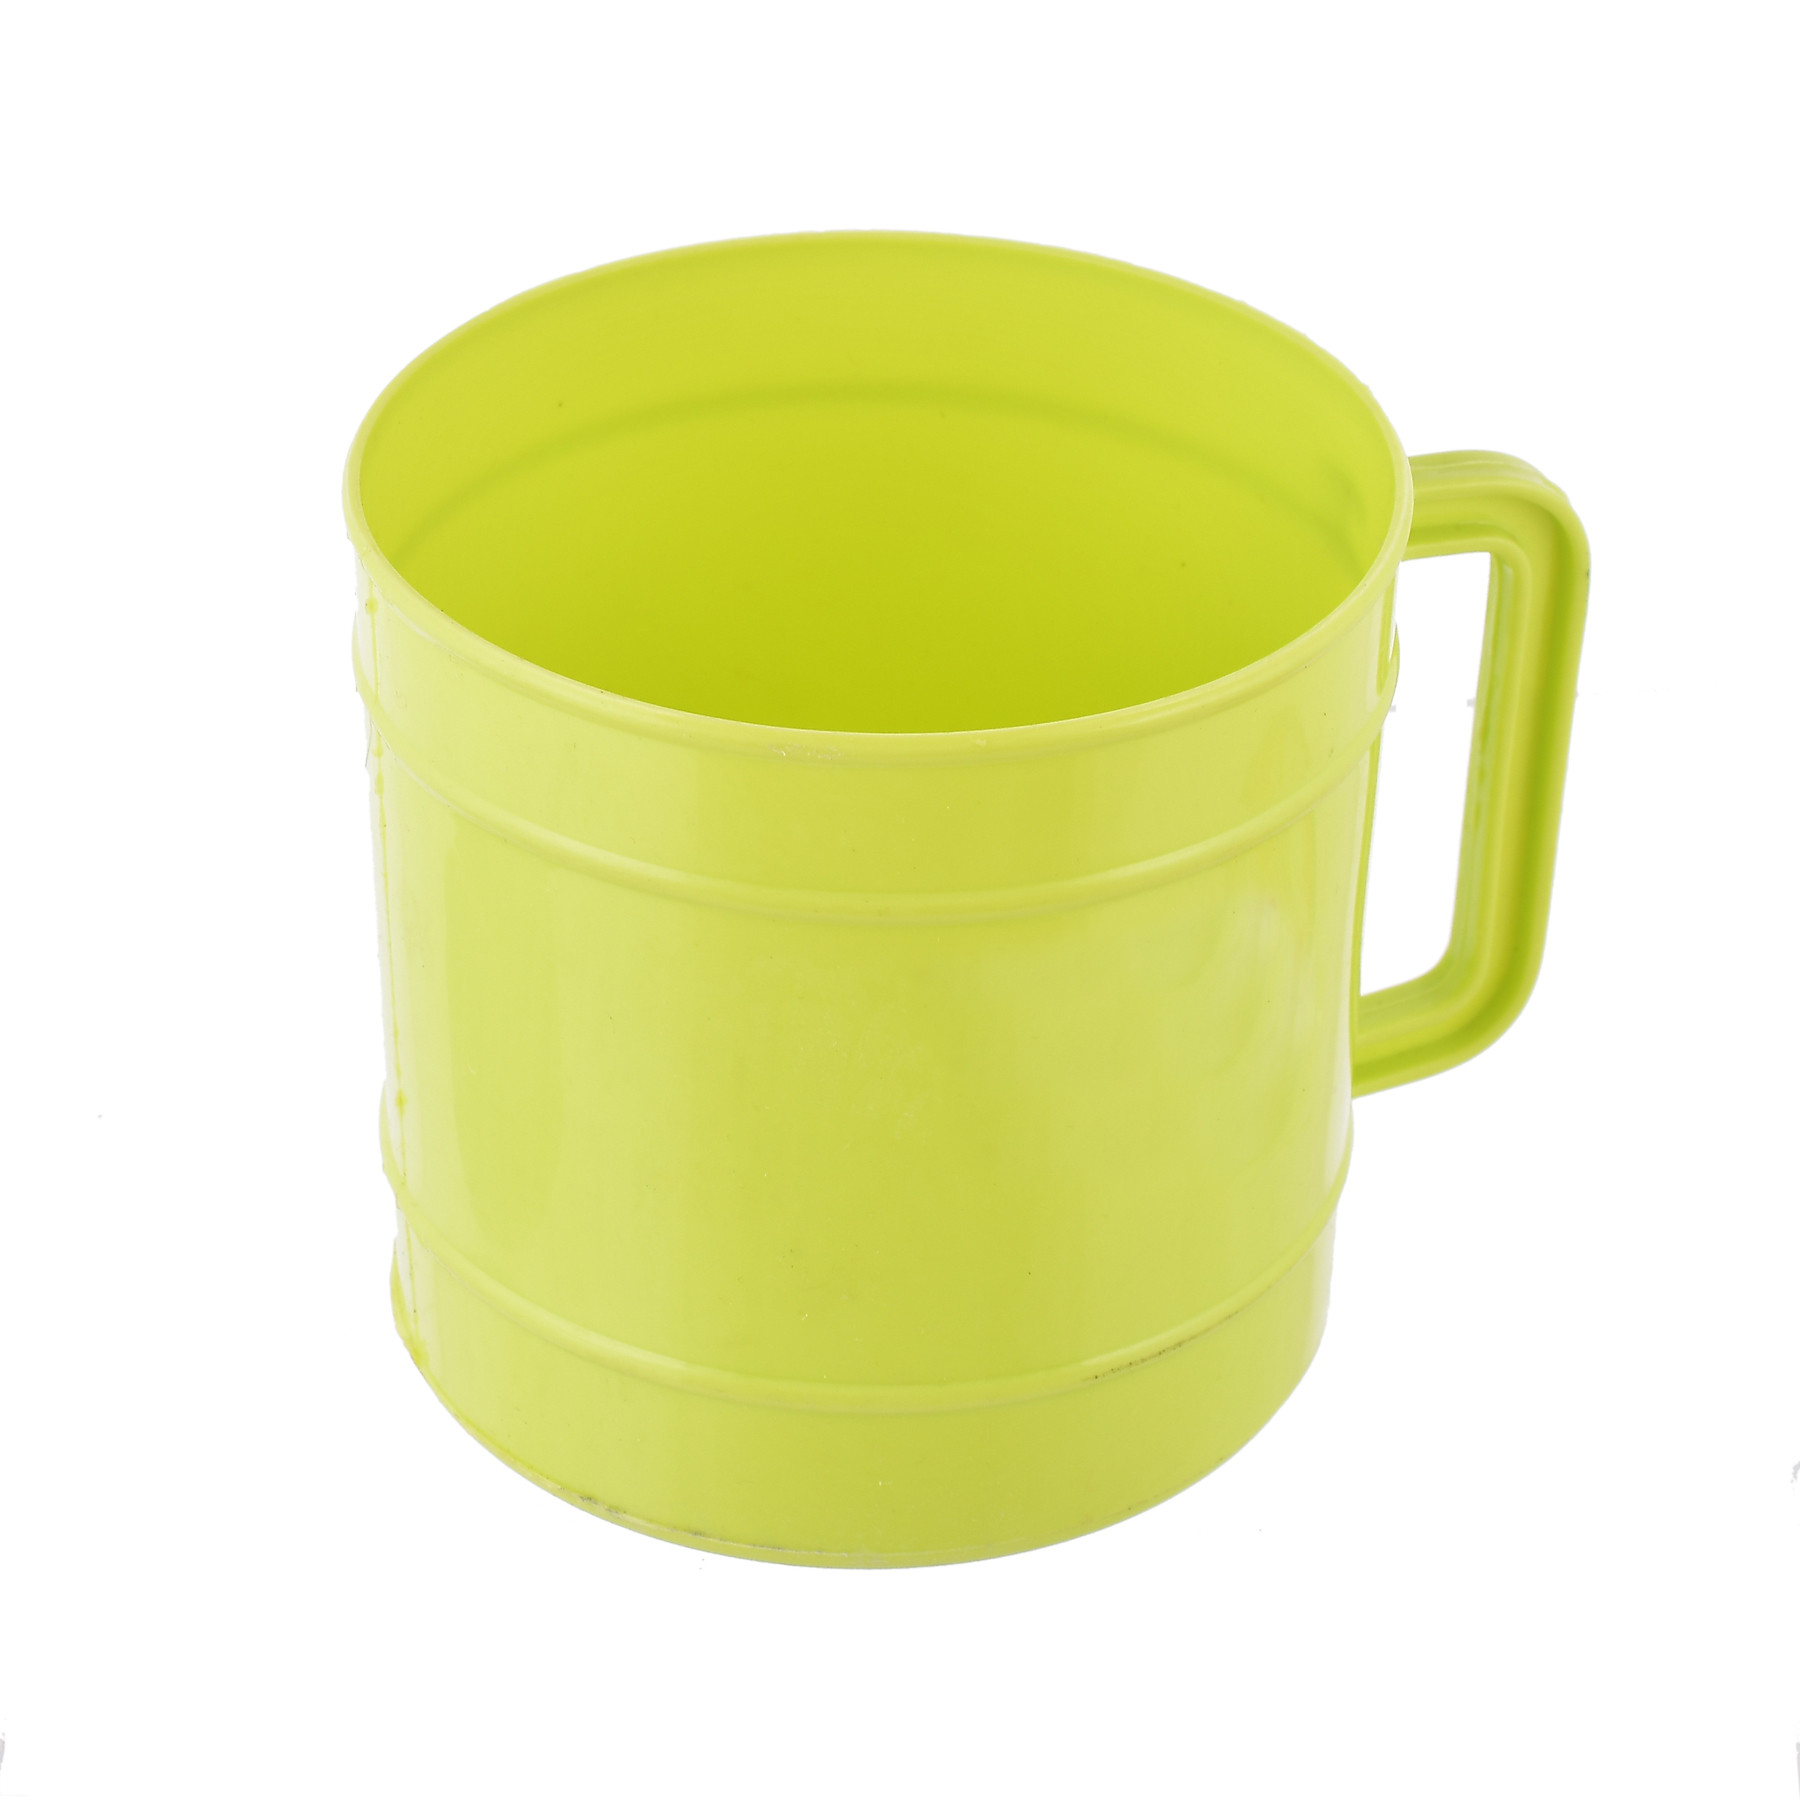 Kuber Industries Plastic Bathroom Mug, 1 Ltr., Pack of 6 (Green & Cream)